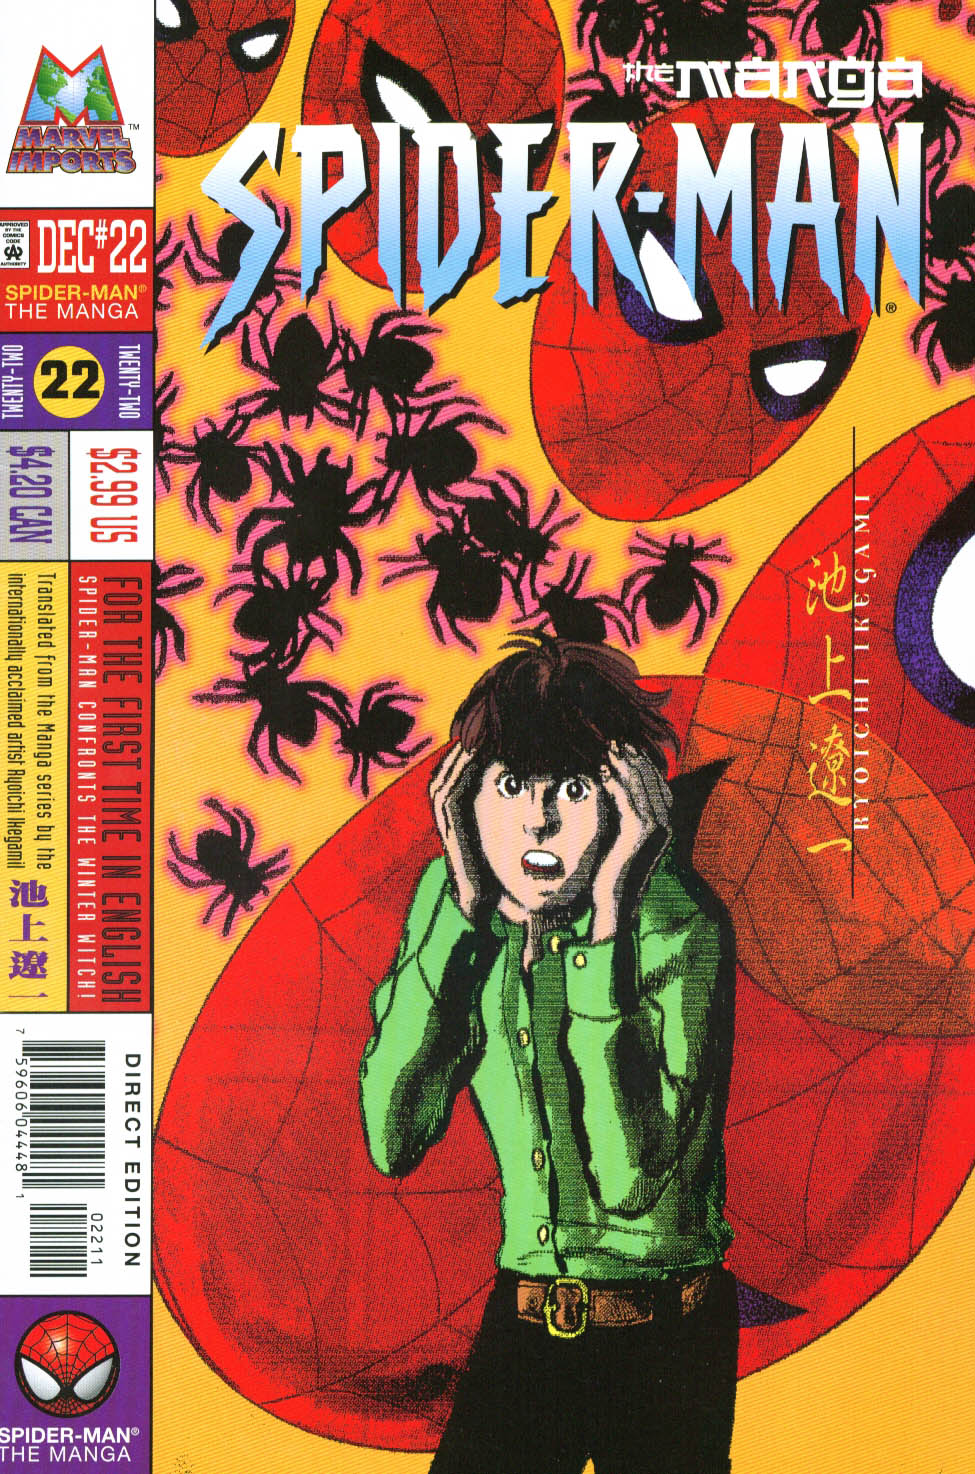 Spider-Man: The Manga Vol 1 22 | Marvel Database | Fandom